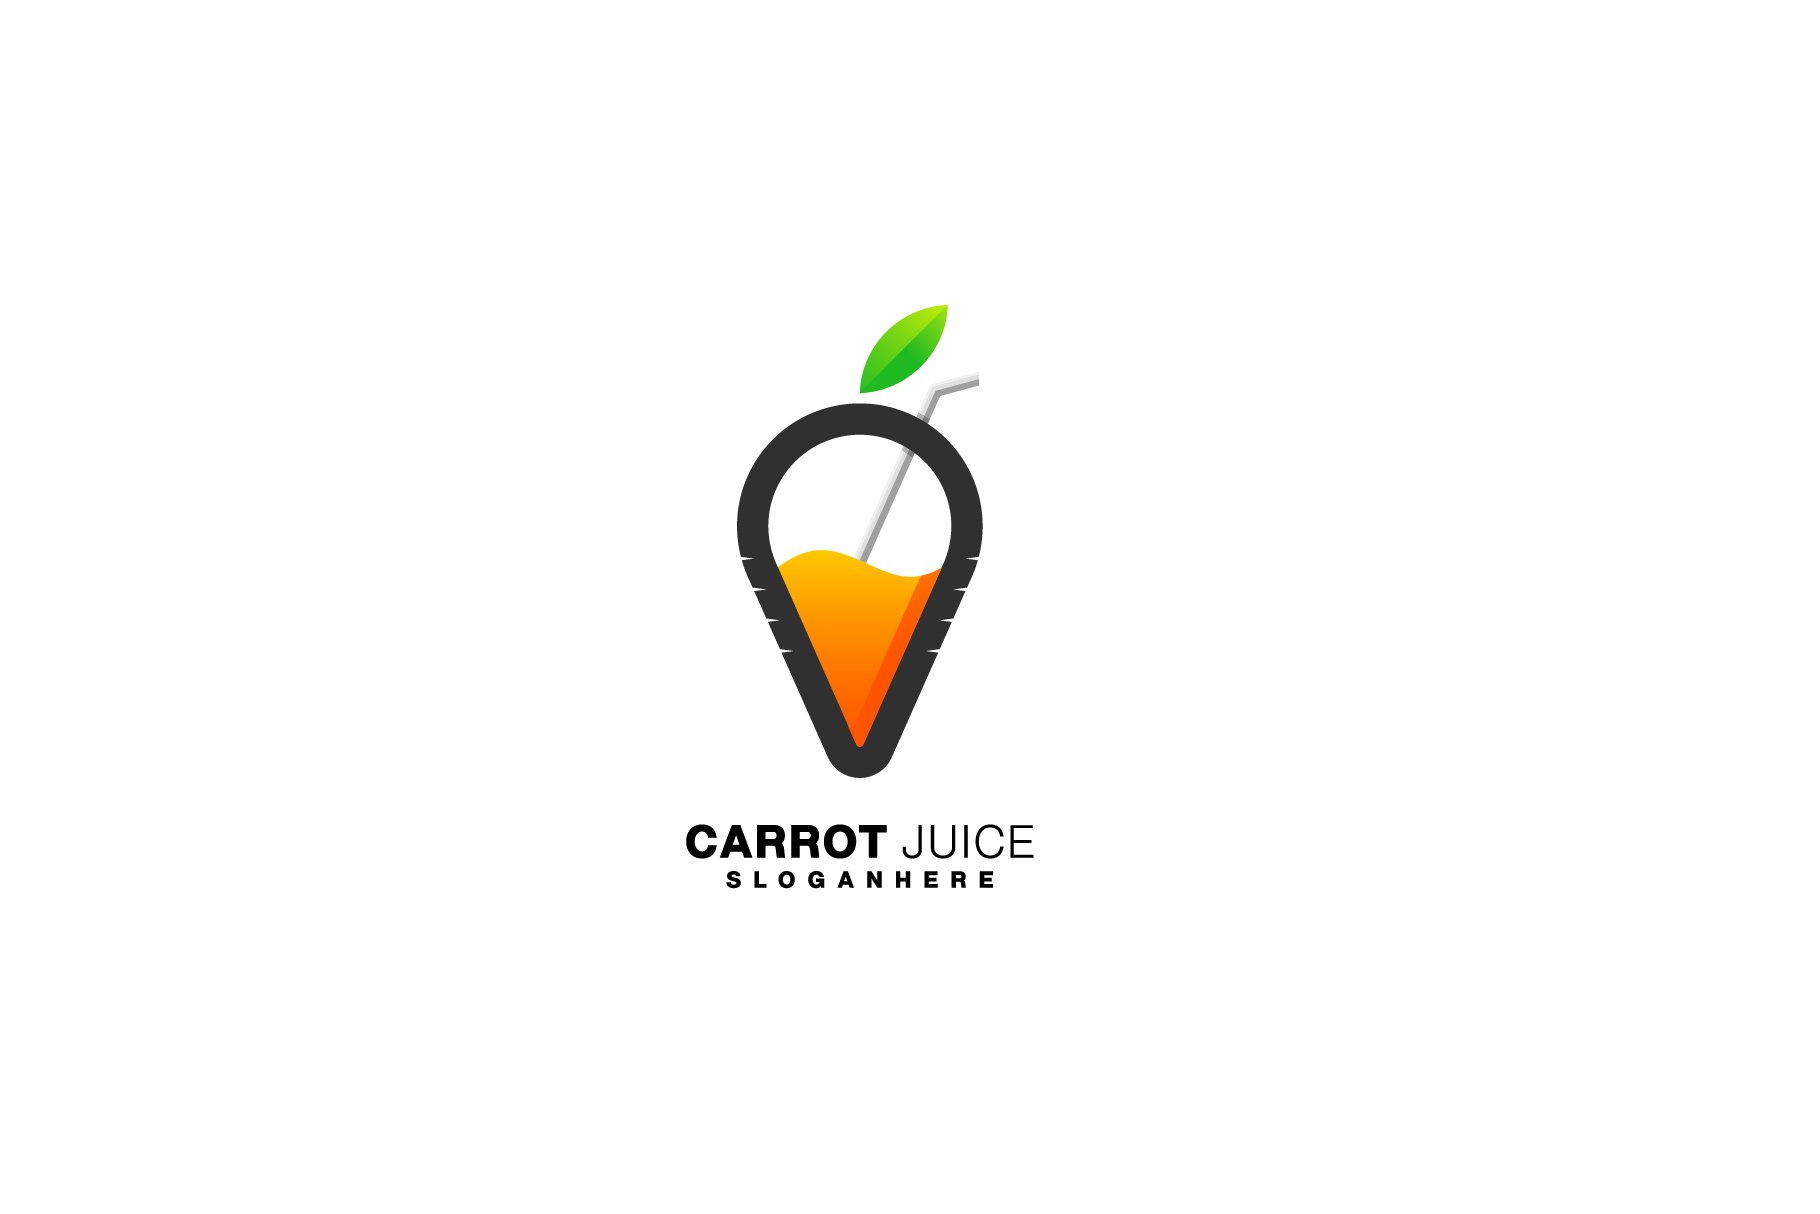 carrot juice design template gradien cover image.